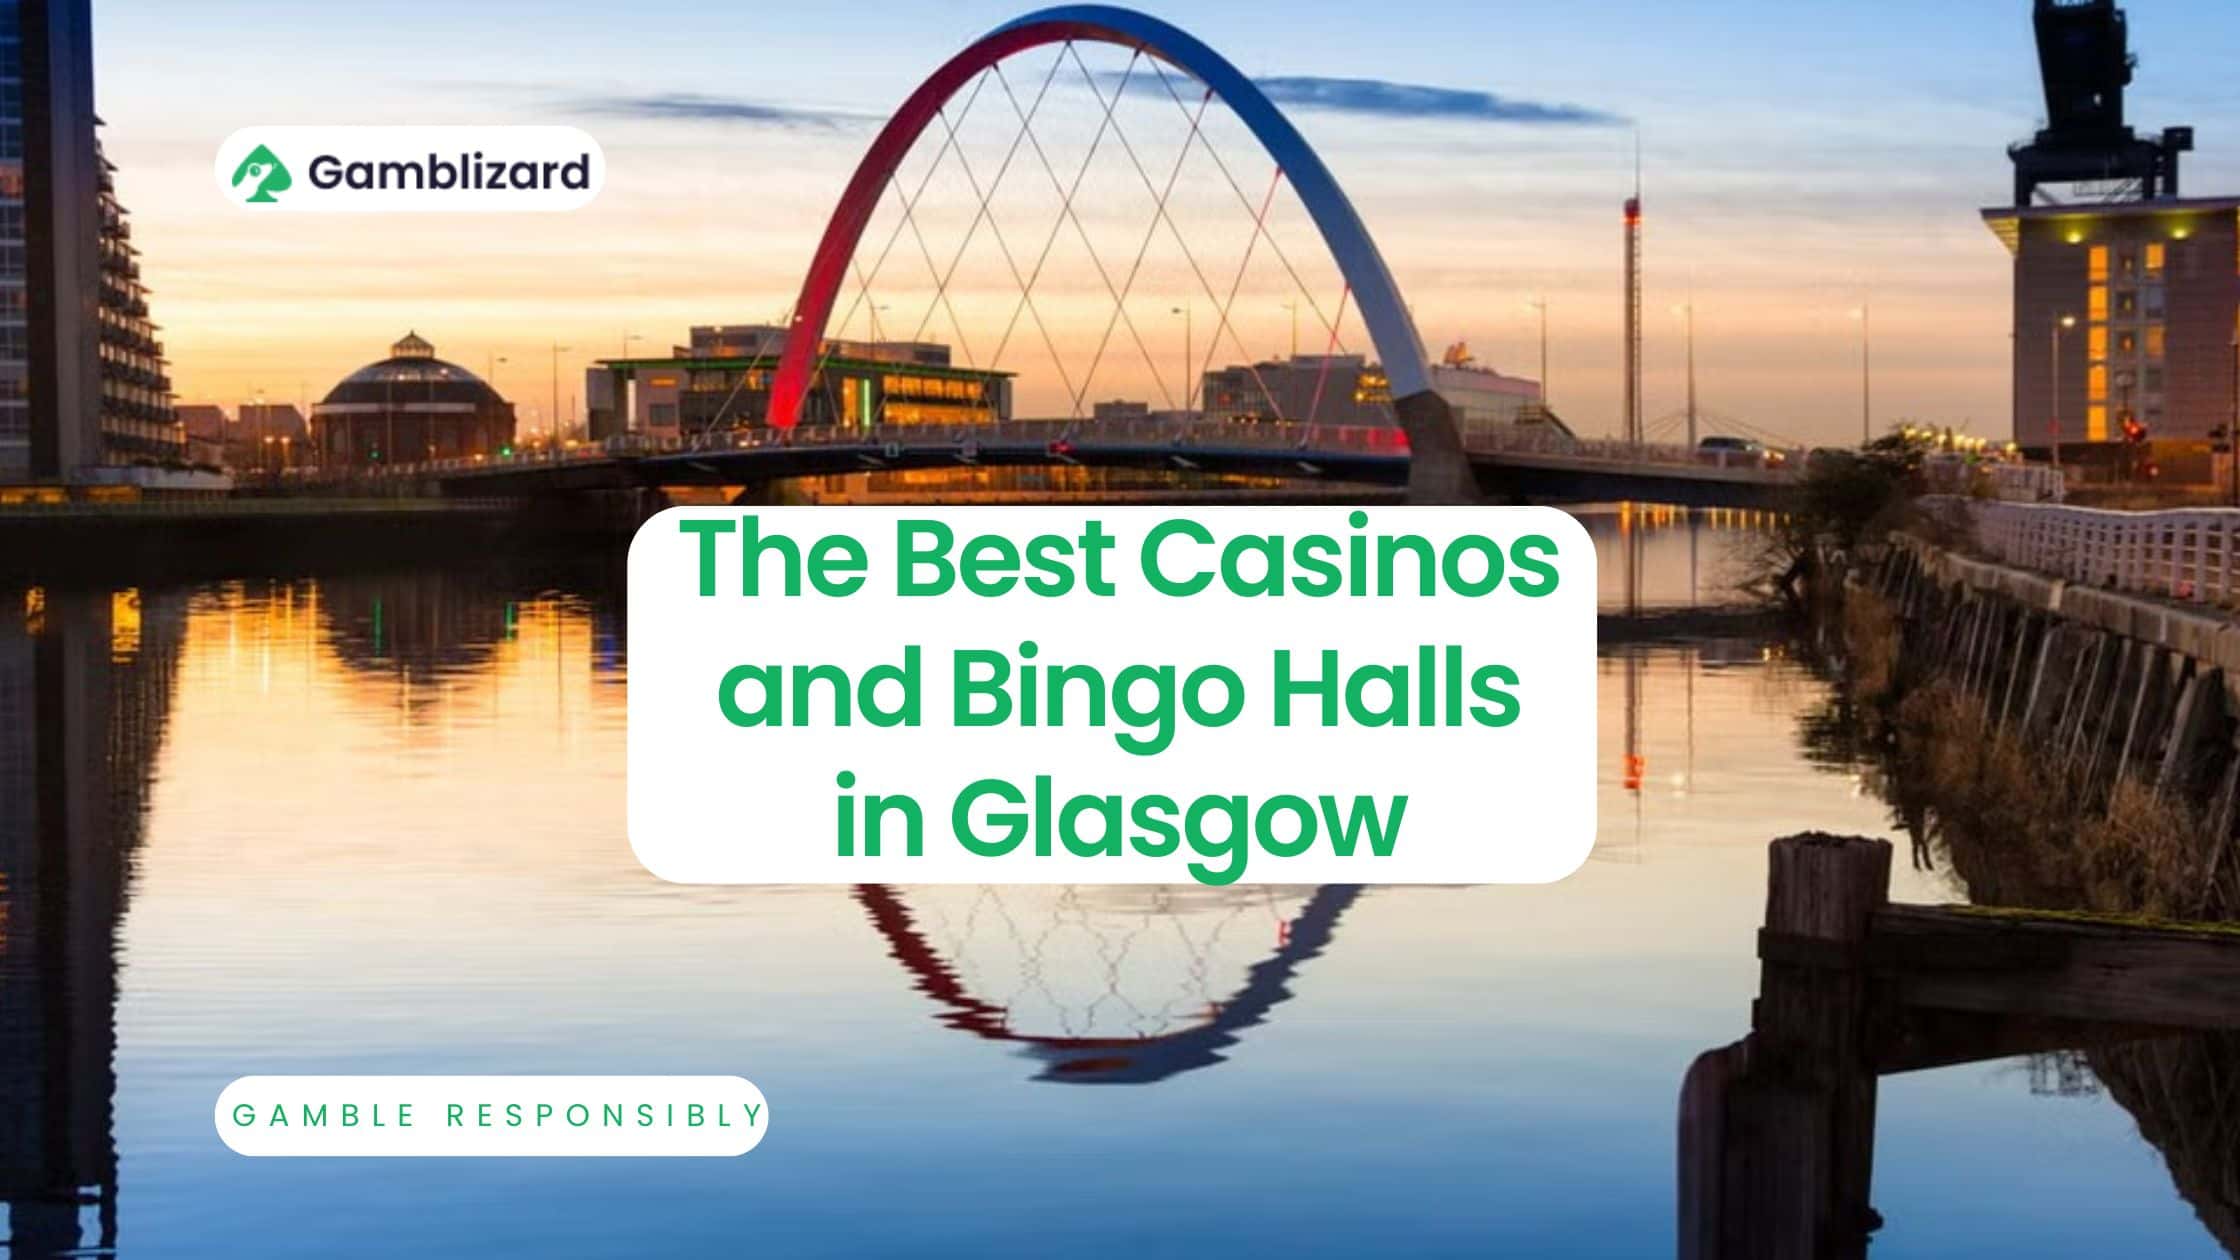 Casinos and bingo halls in Glasgow